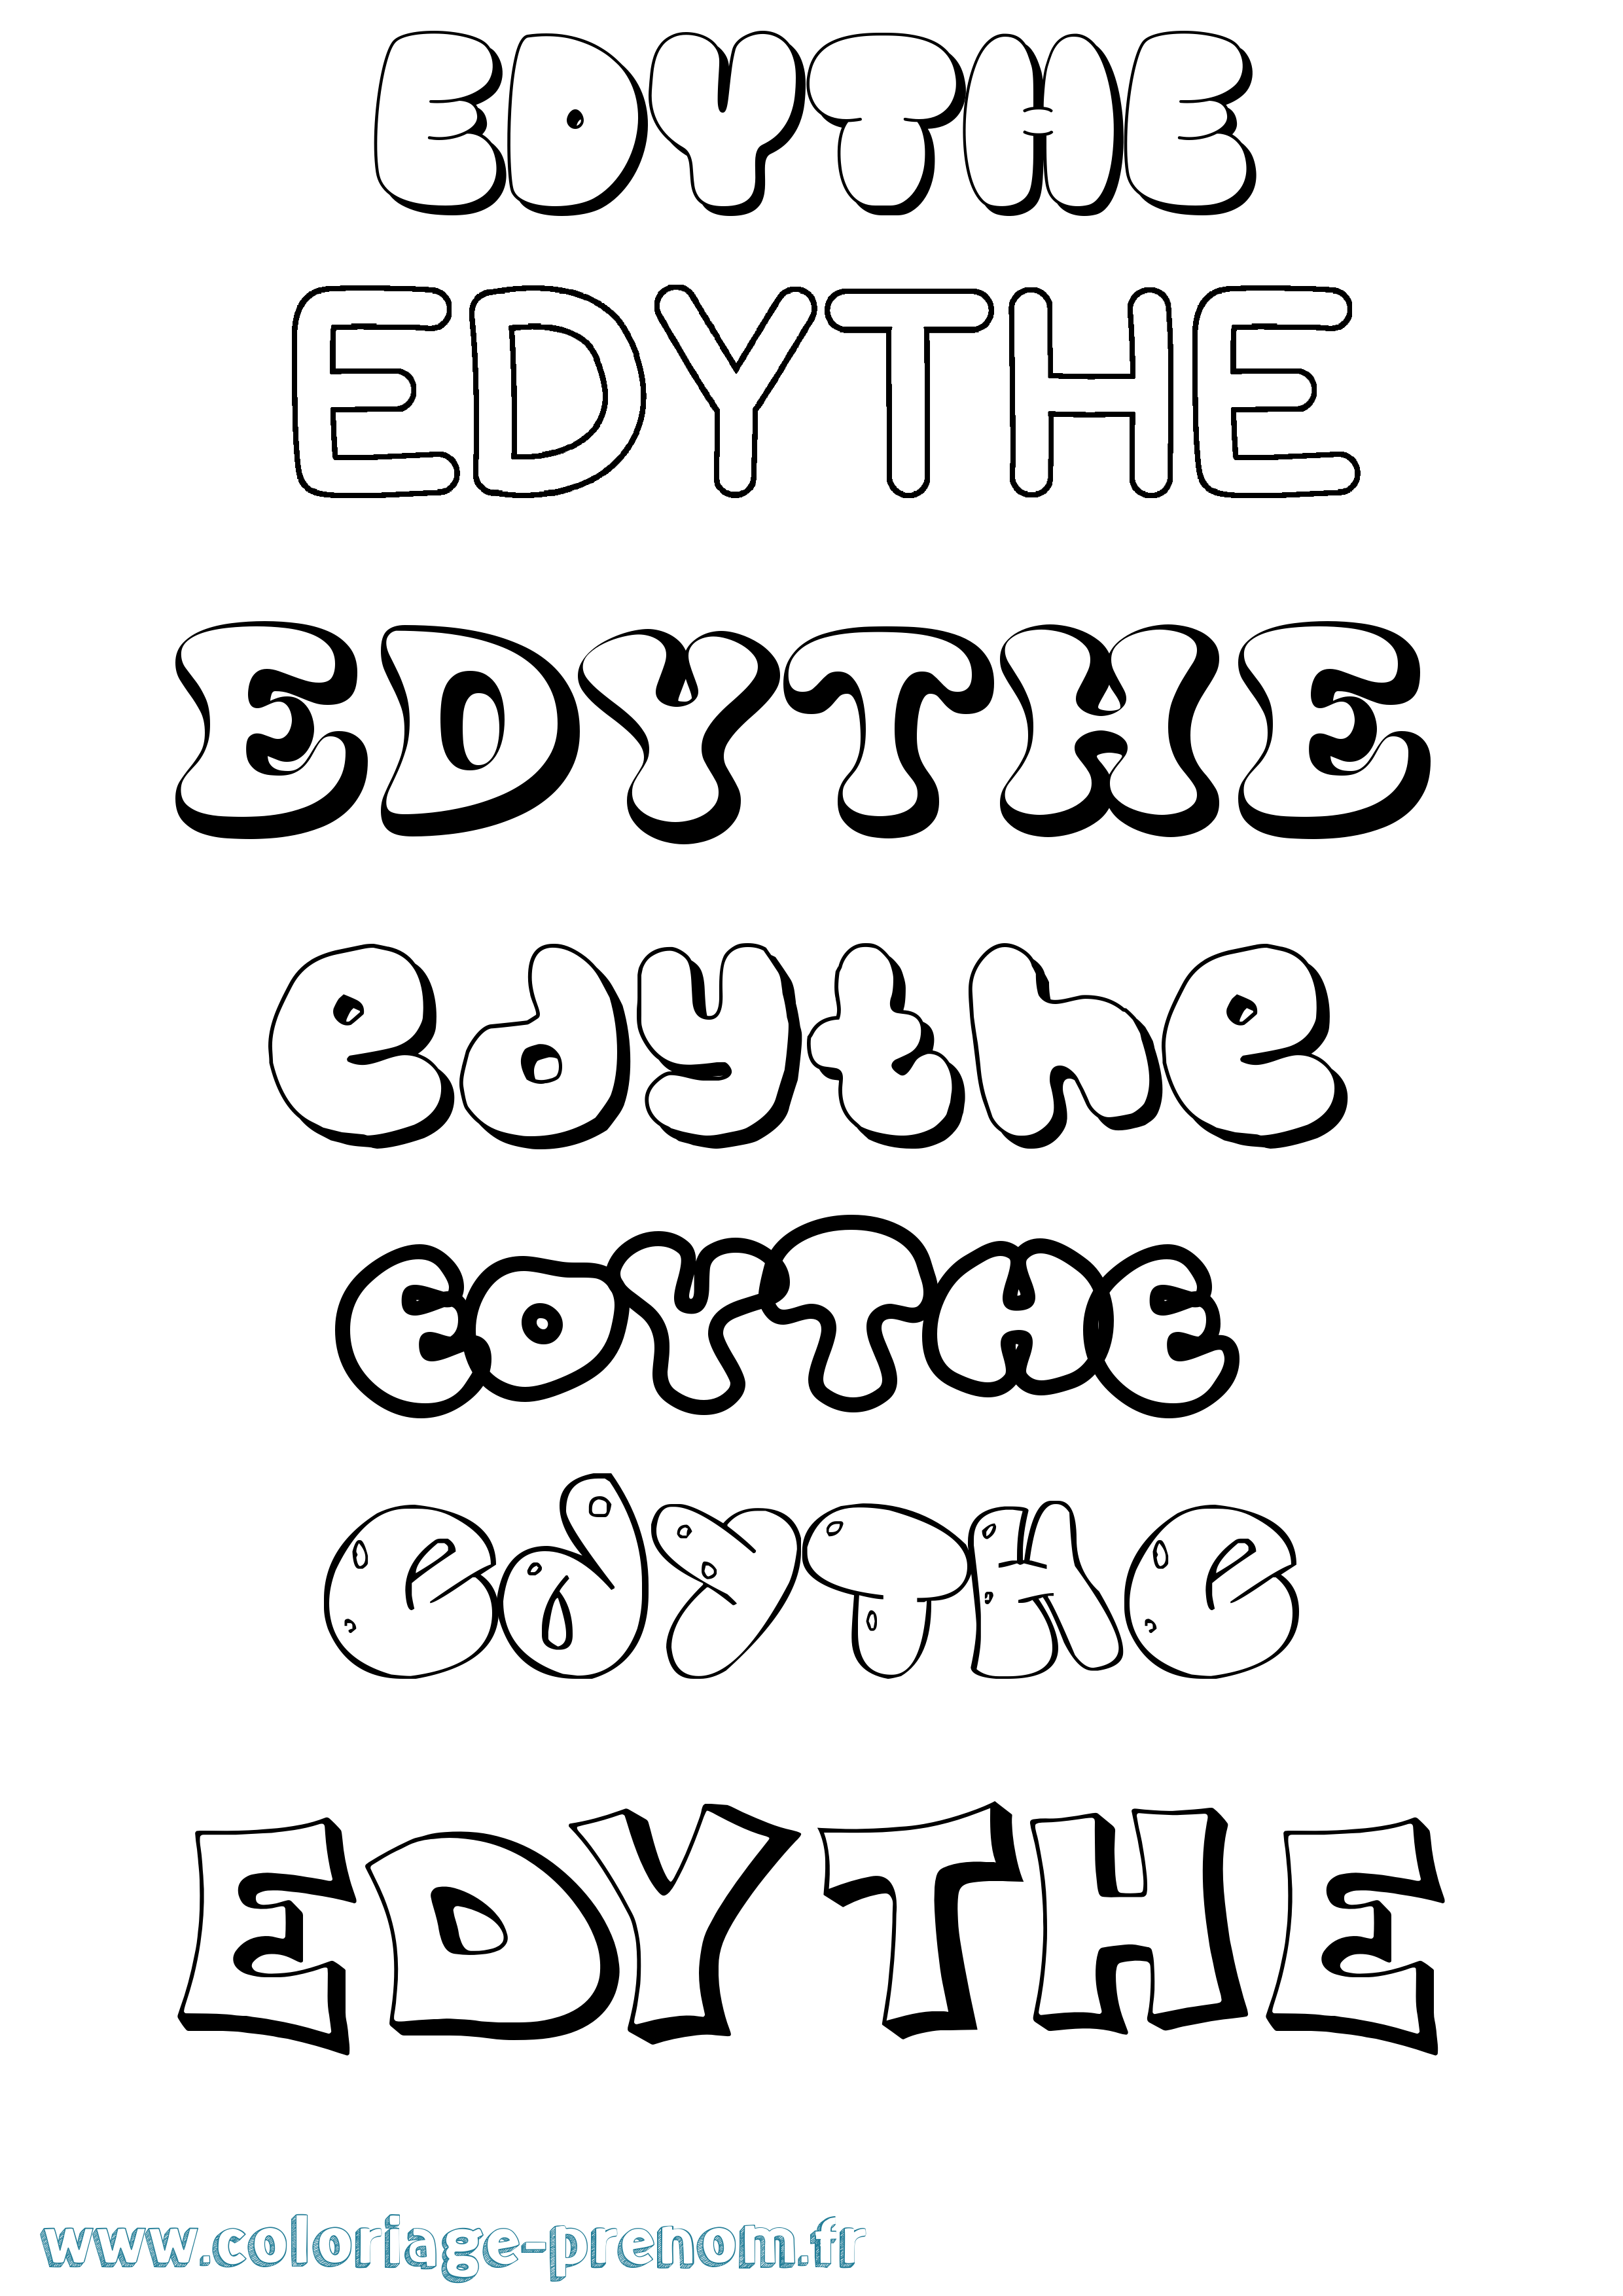 Coloriage prénom Edythe Bubble